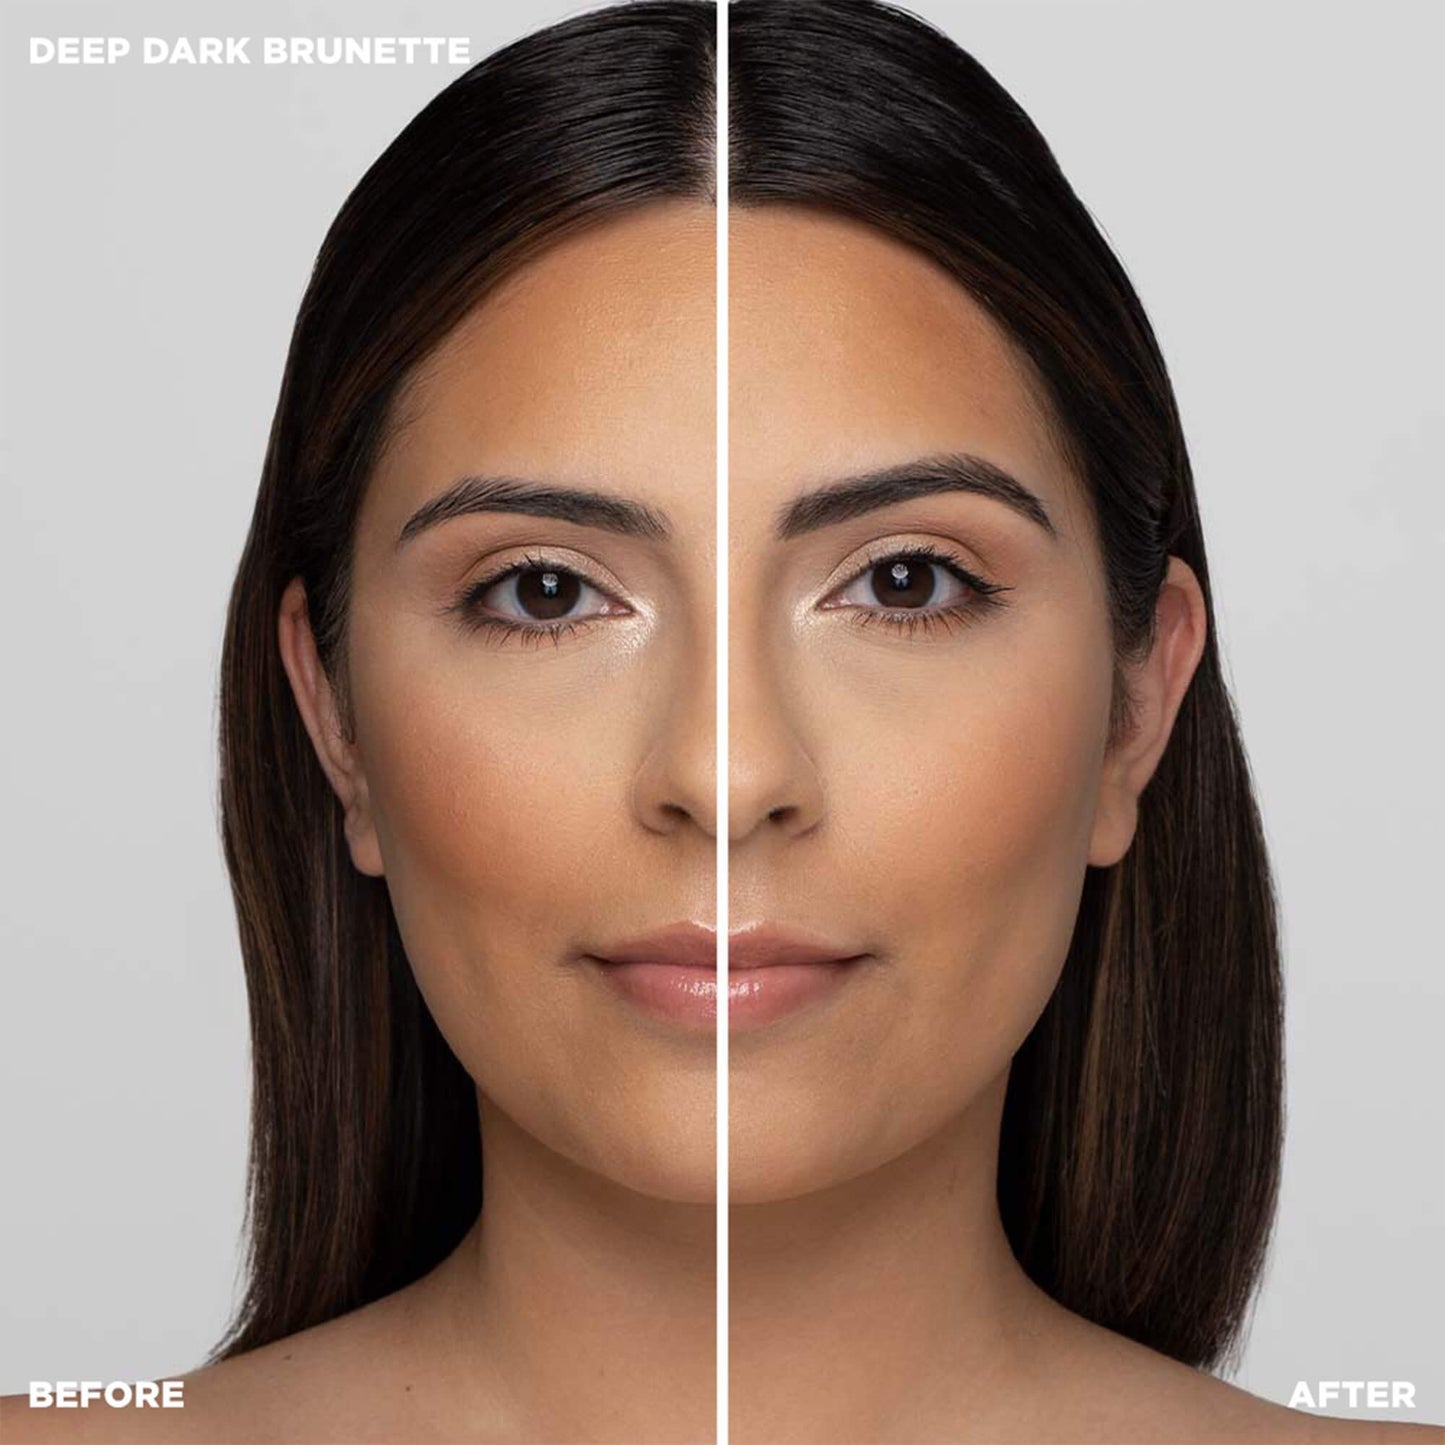 Before and after shot of model wearing Color-Deep Dark Brunette - Dark Brown